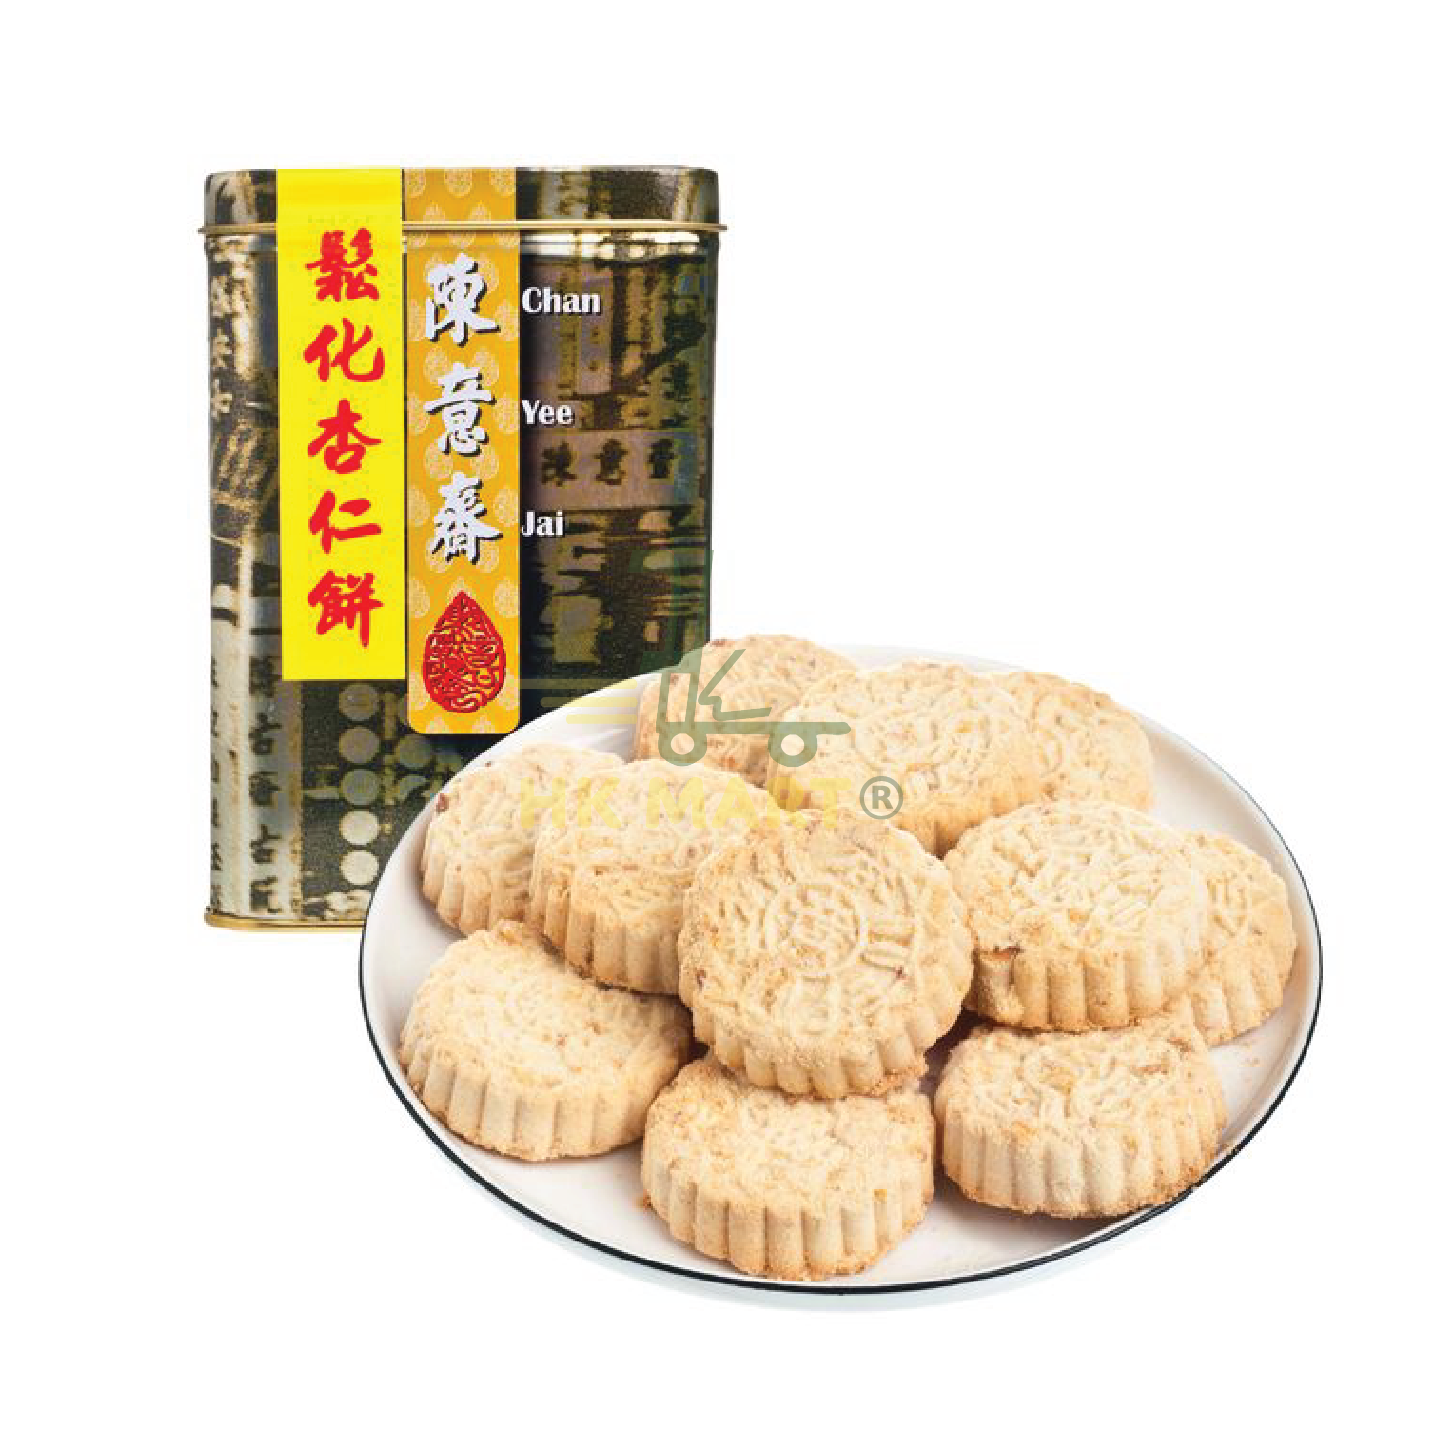 CHAN YEE JAI ALMOND COOKIES 15 PCS 陳意齋 鬆化杏仁餅(罐裝) 15件